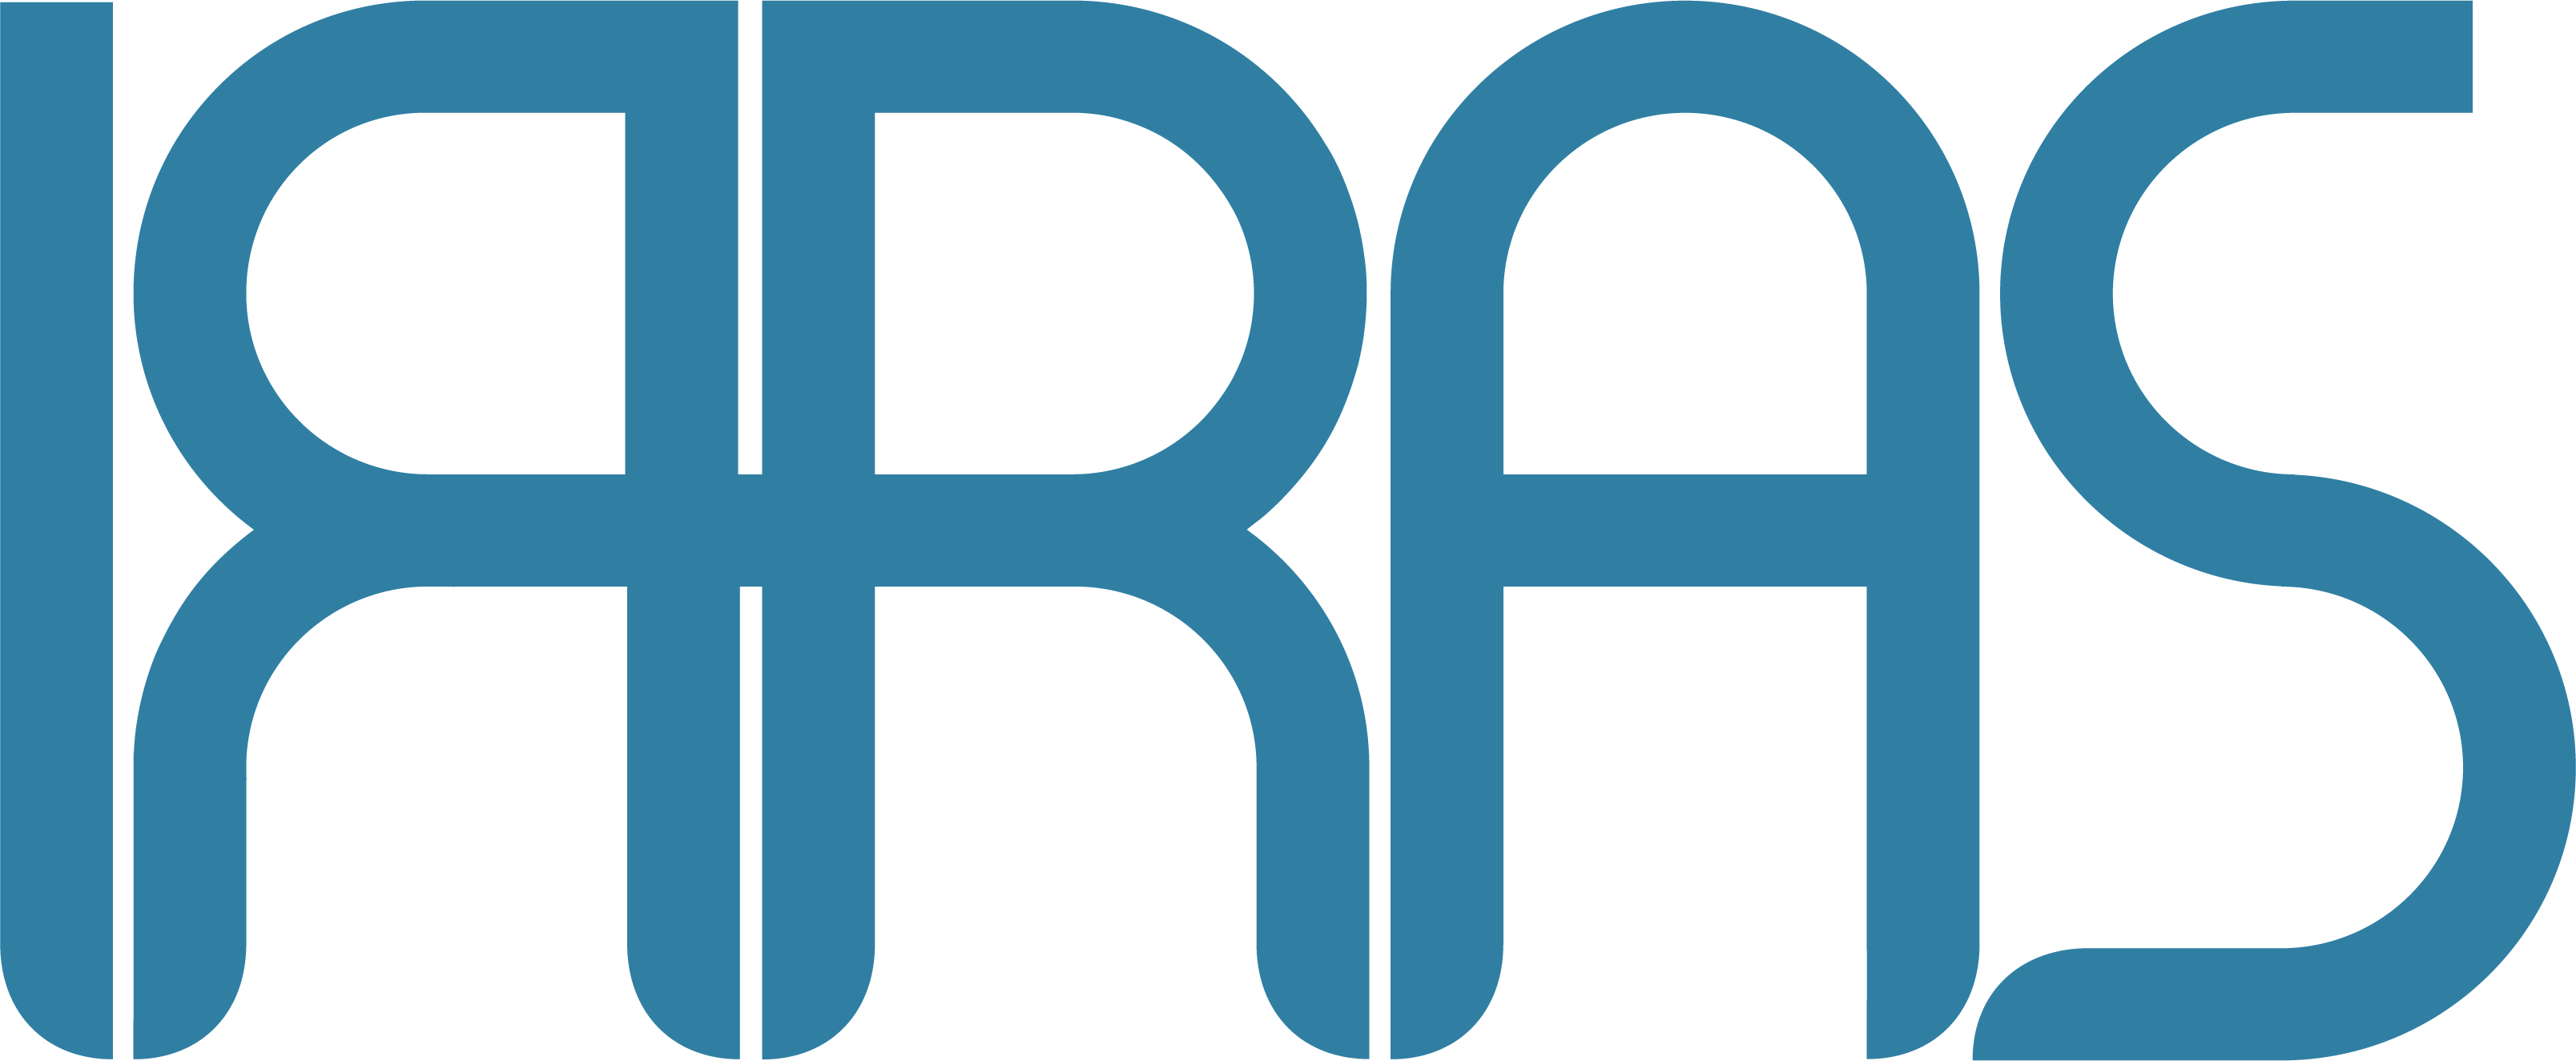 IRRAS logo file 01color 1